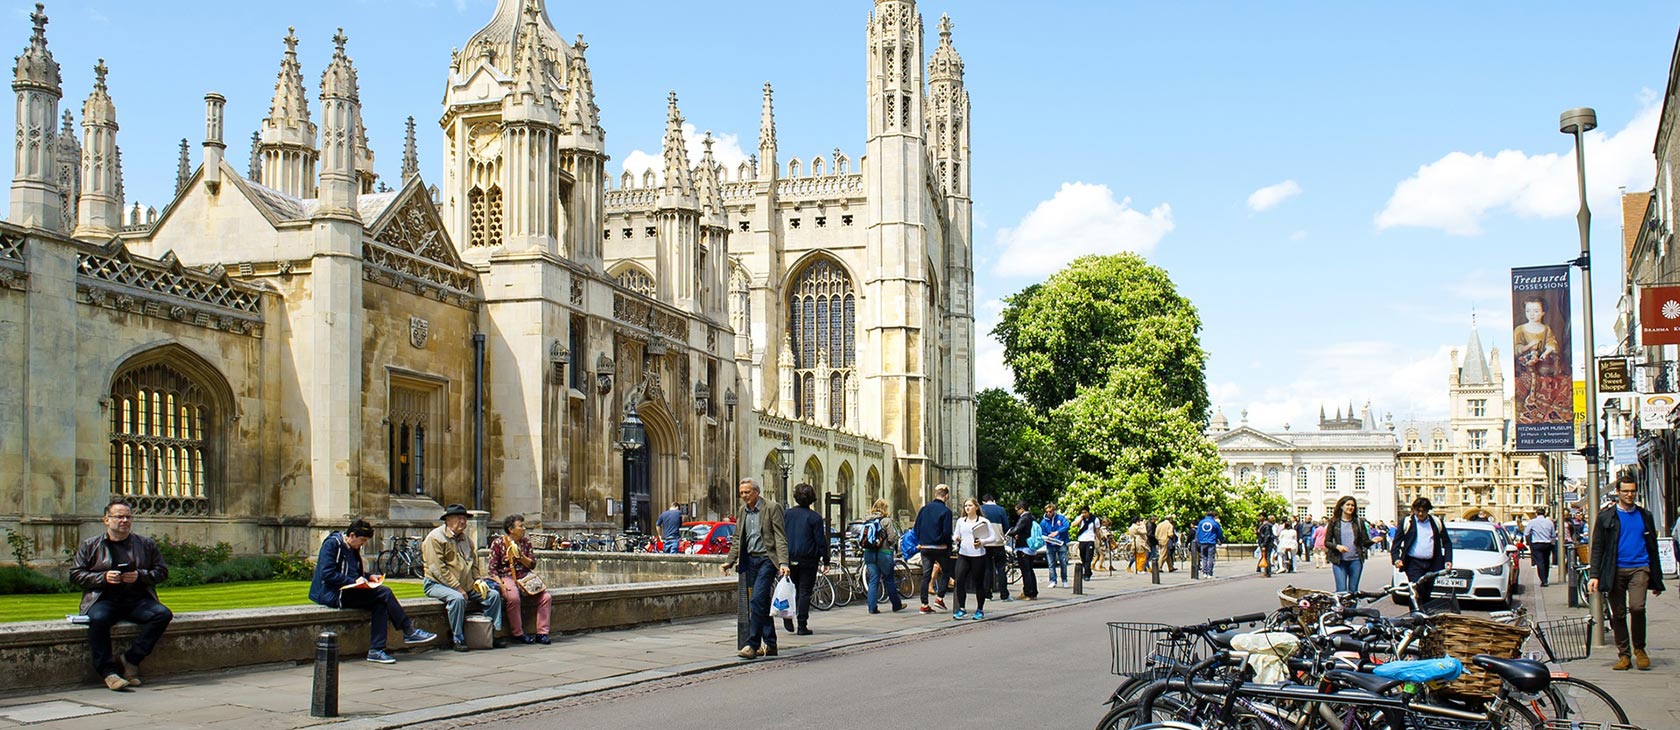 Pedestrians and students walking on the street near Cambridge University